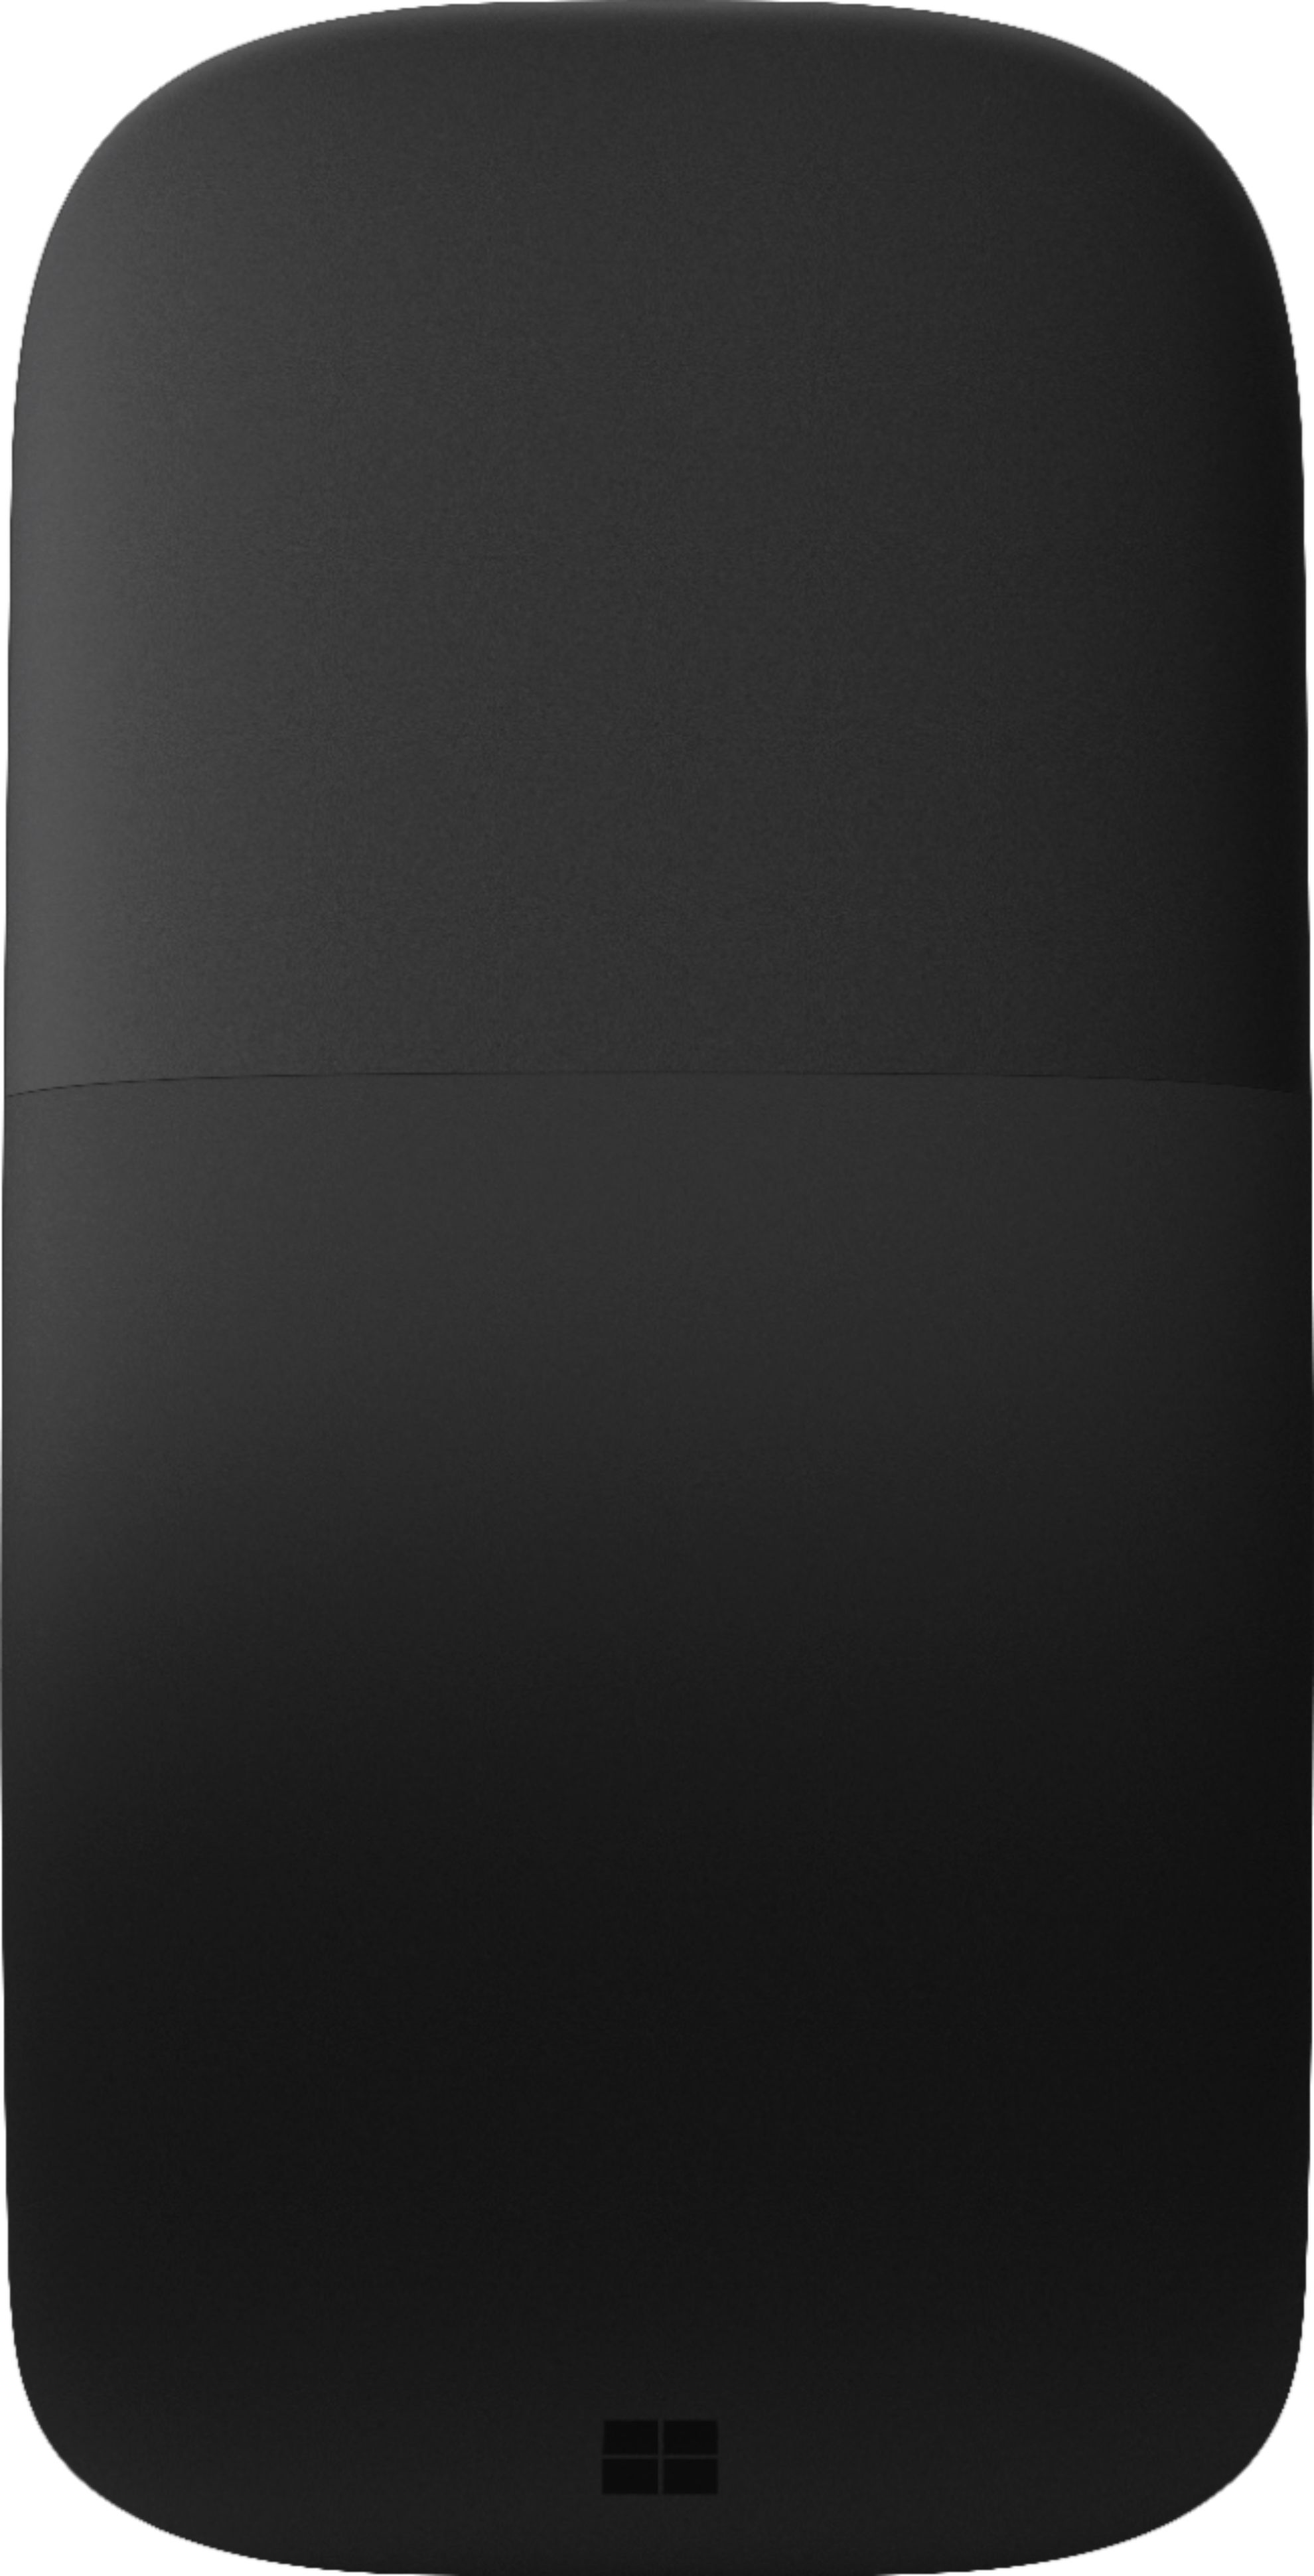 Microsoft Surface Arc Mouse CZV-00097/ELG-00001 Best Wireless Ambidextrous BlueTrack Buy - Black